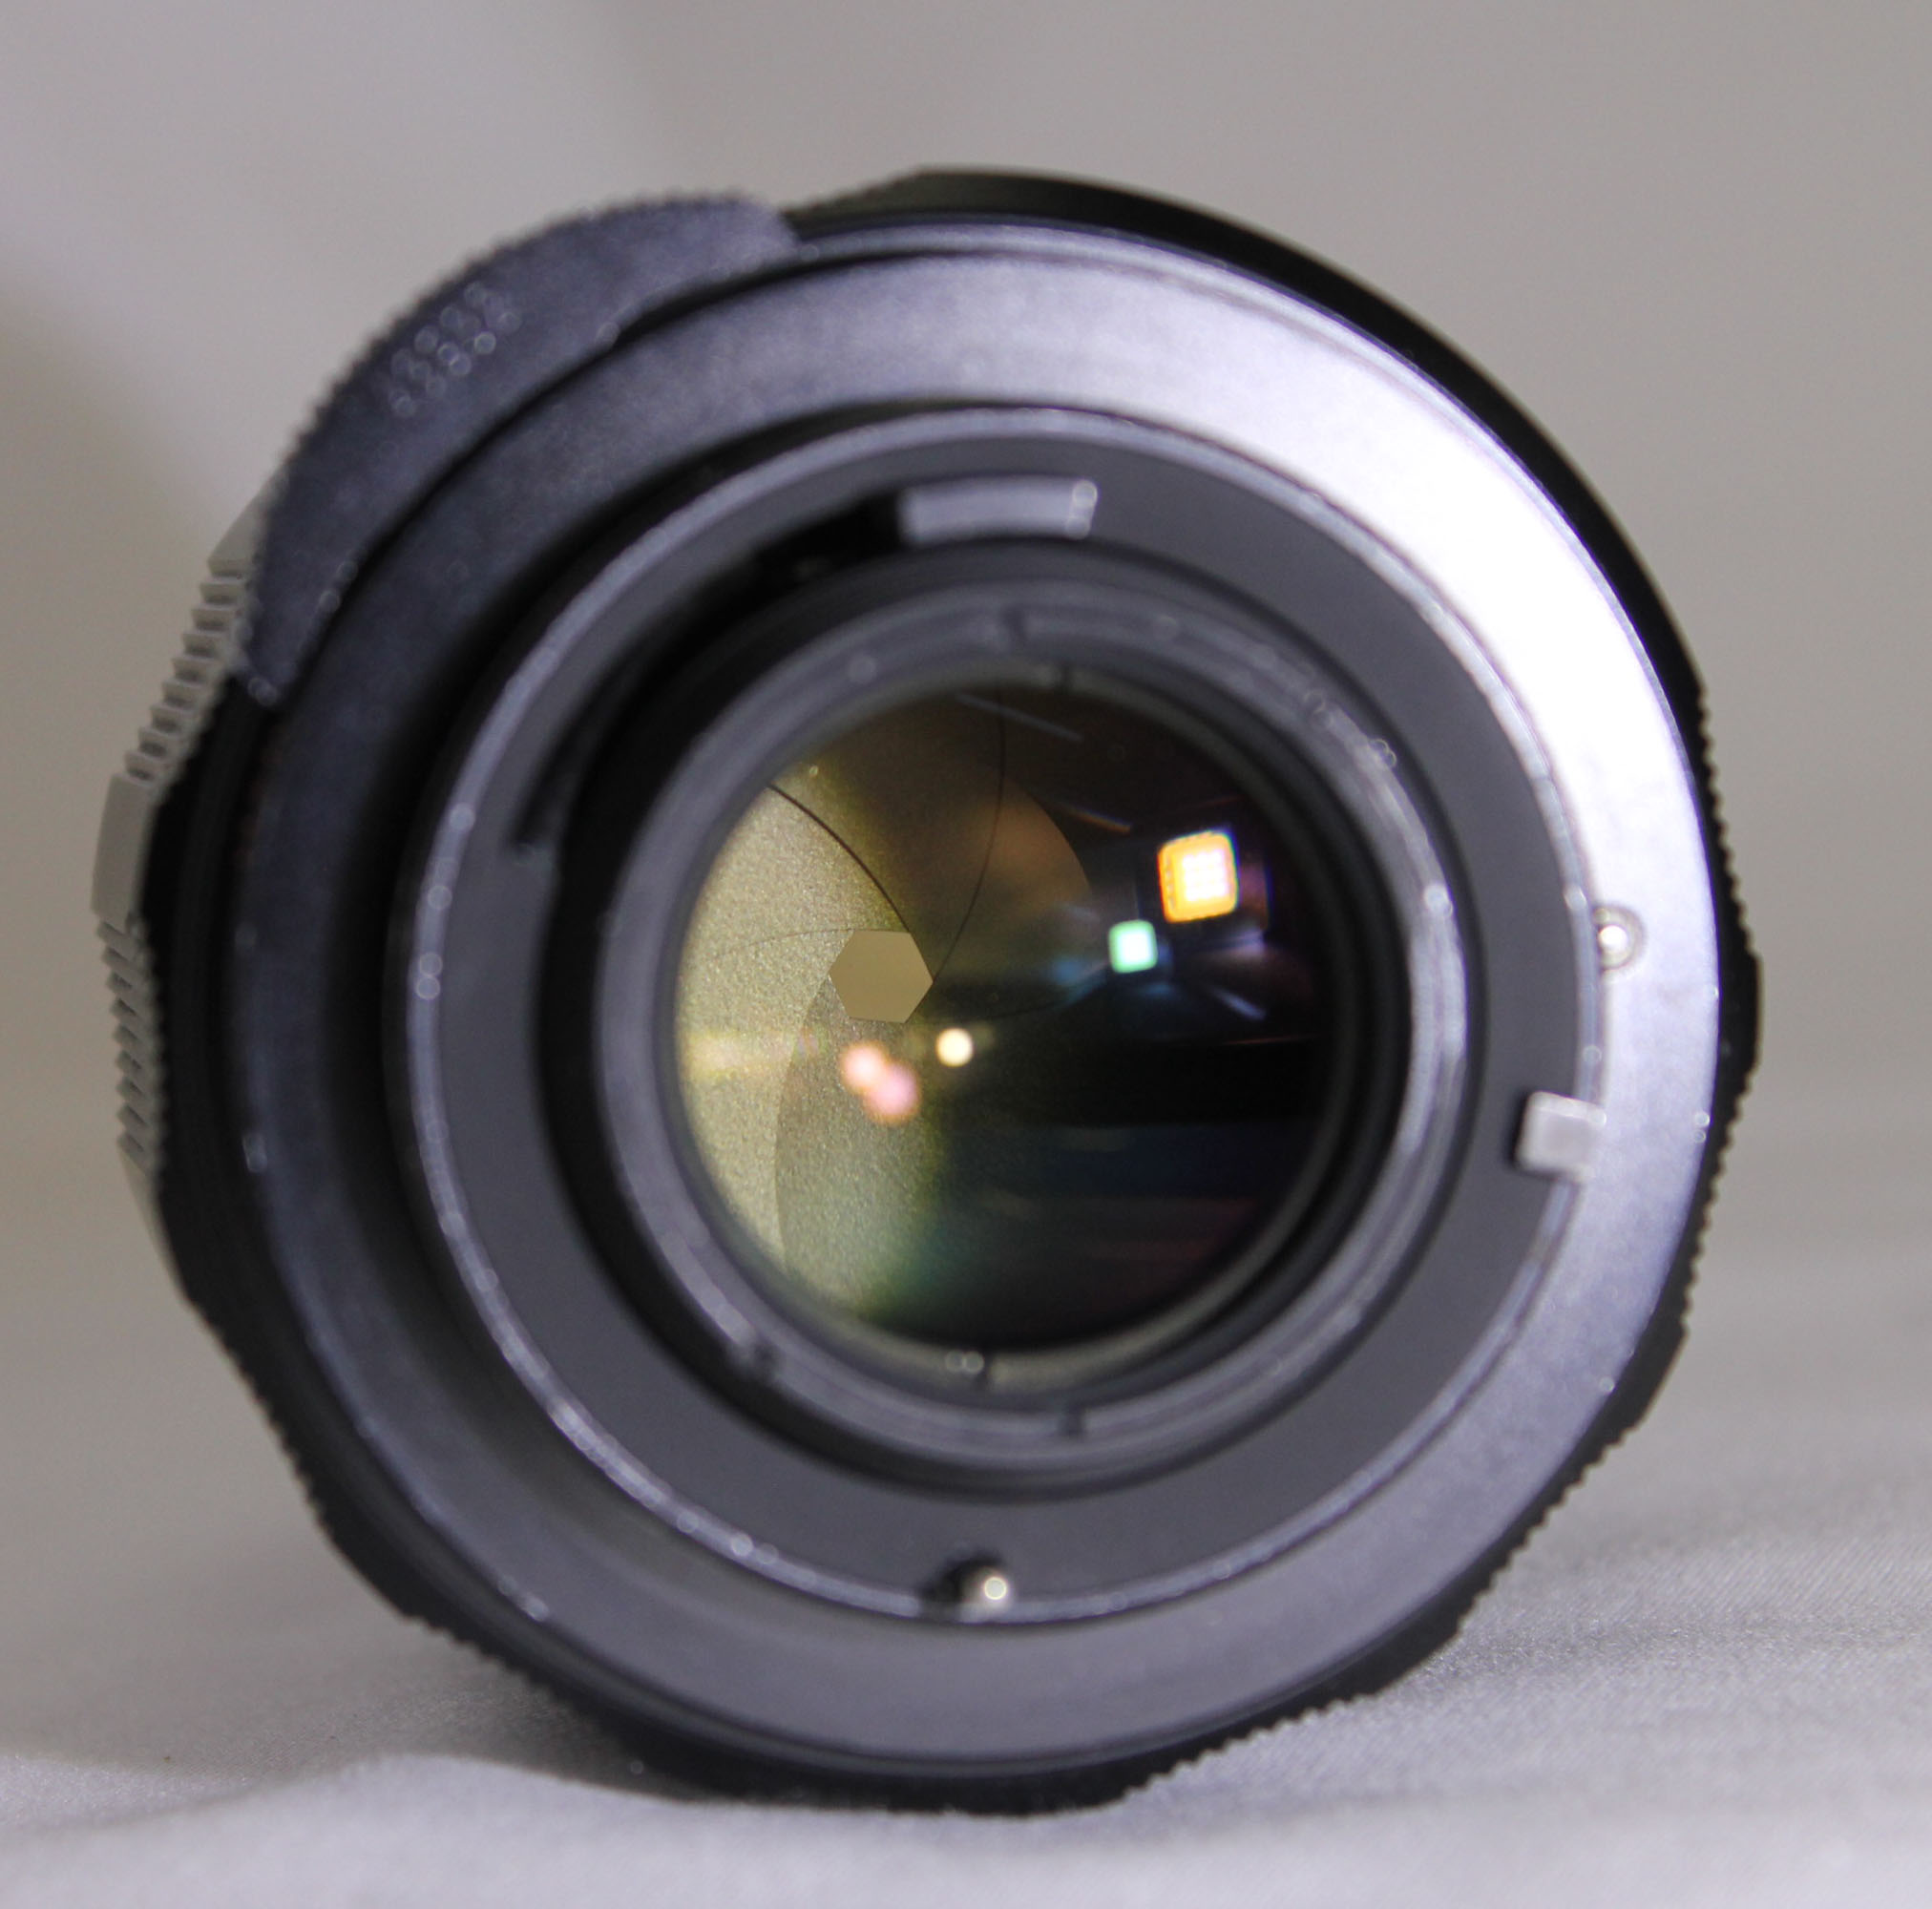  Pentax Super Multi Coated SMC Takumar 35mm F/2 M42 Wide Angle MF Lens from Japan Photo 8